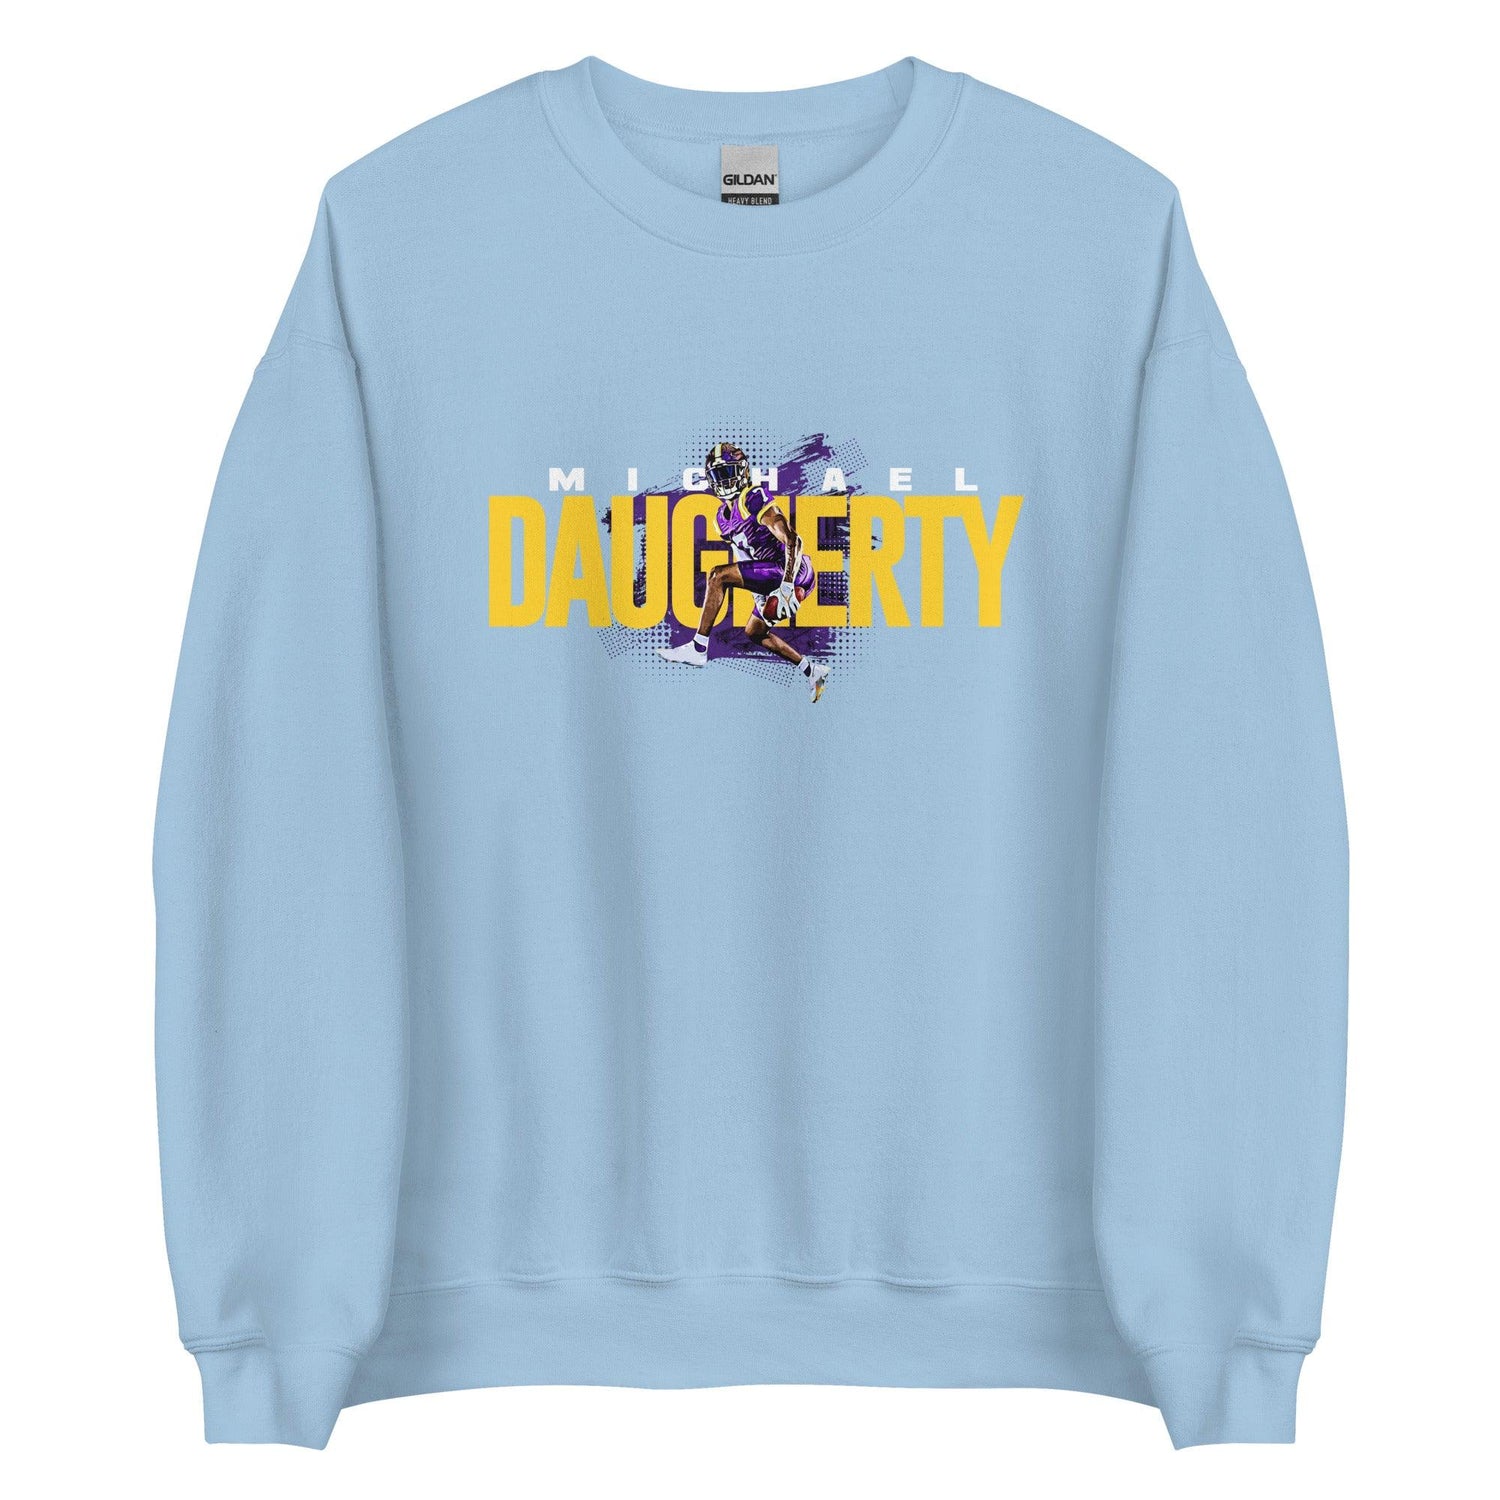 Michael Daugherty "Gameday" Sweatshirt - Fan Arch